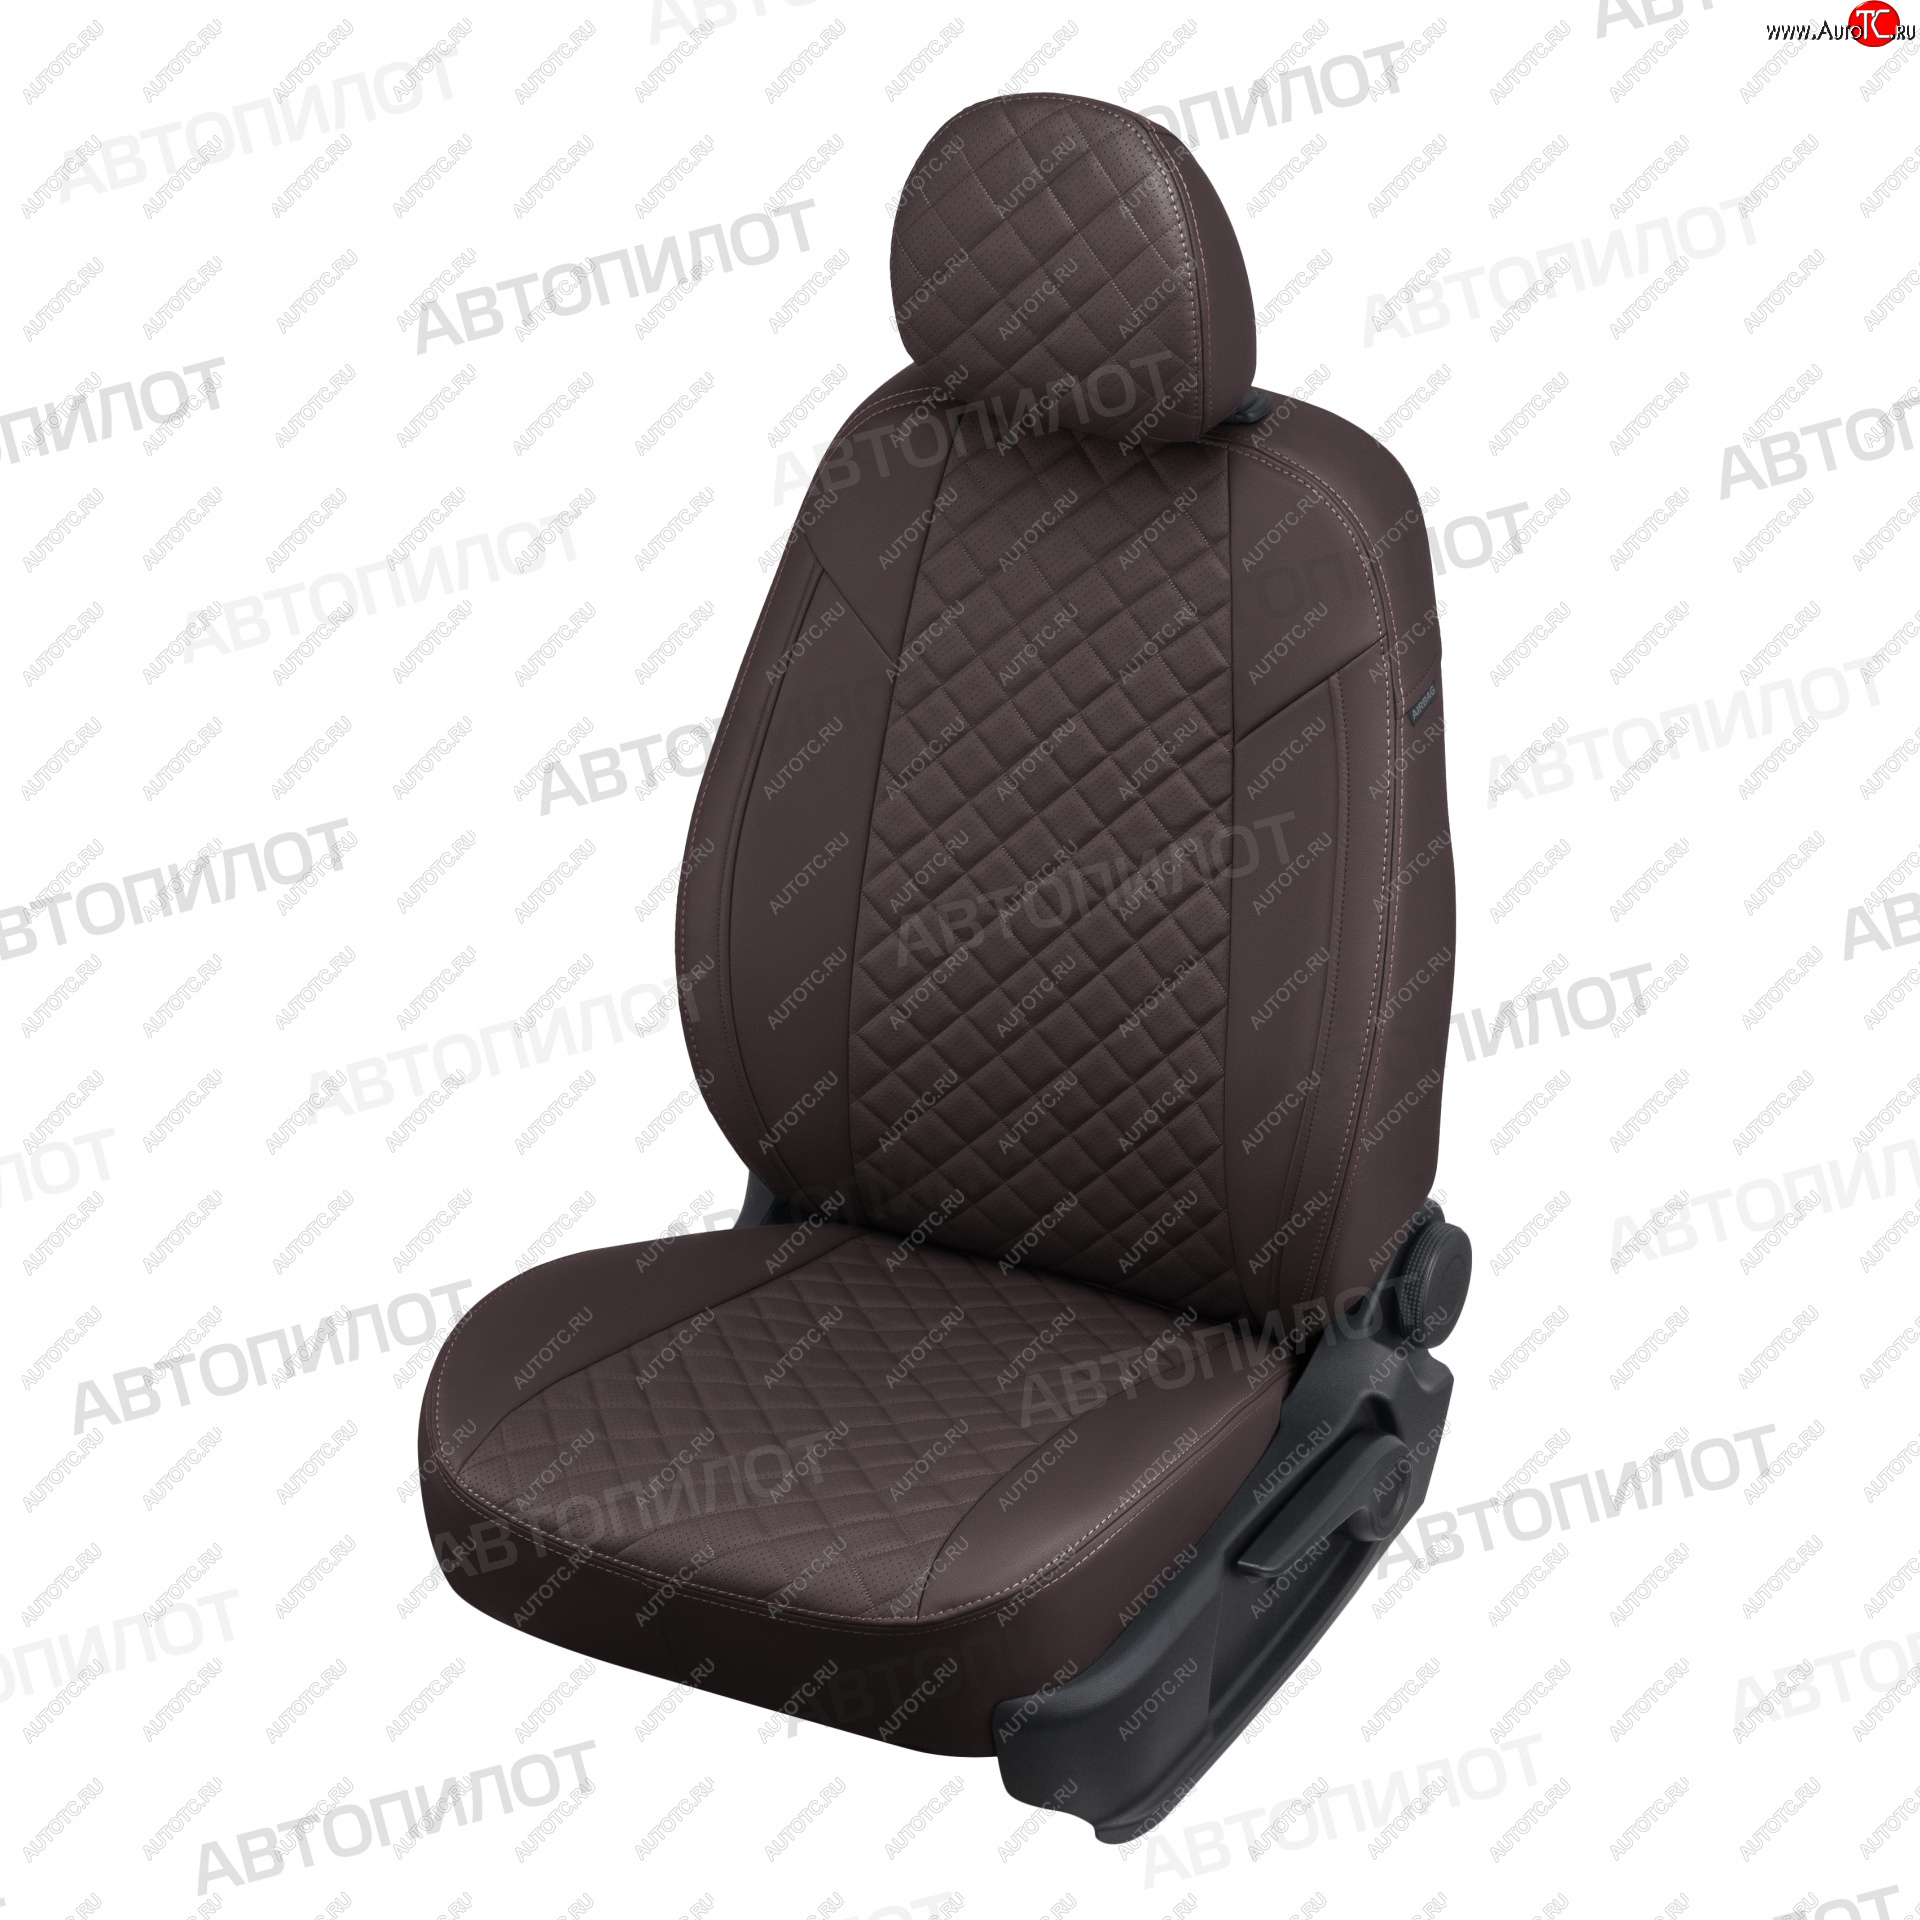 13 999 р. Чехлы сидений (5 мест, экокожа) Автопилот Ромб  Ford Galaxy  2 (2006-2015) (шоколад)